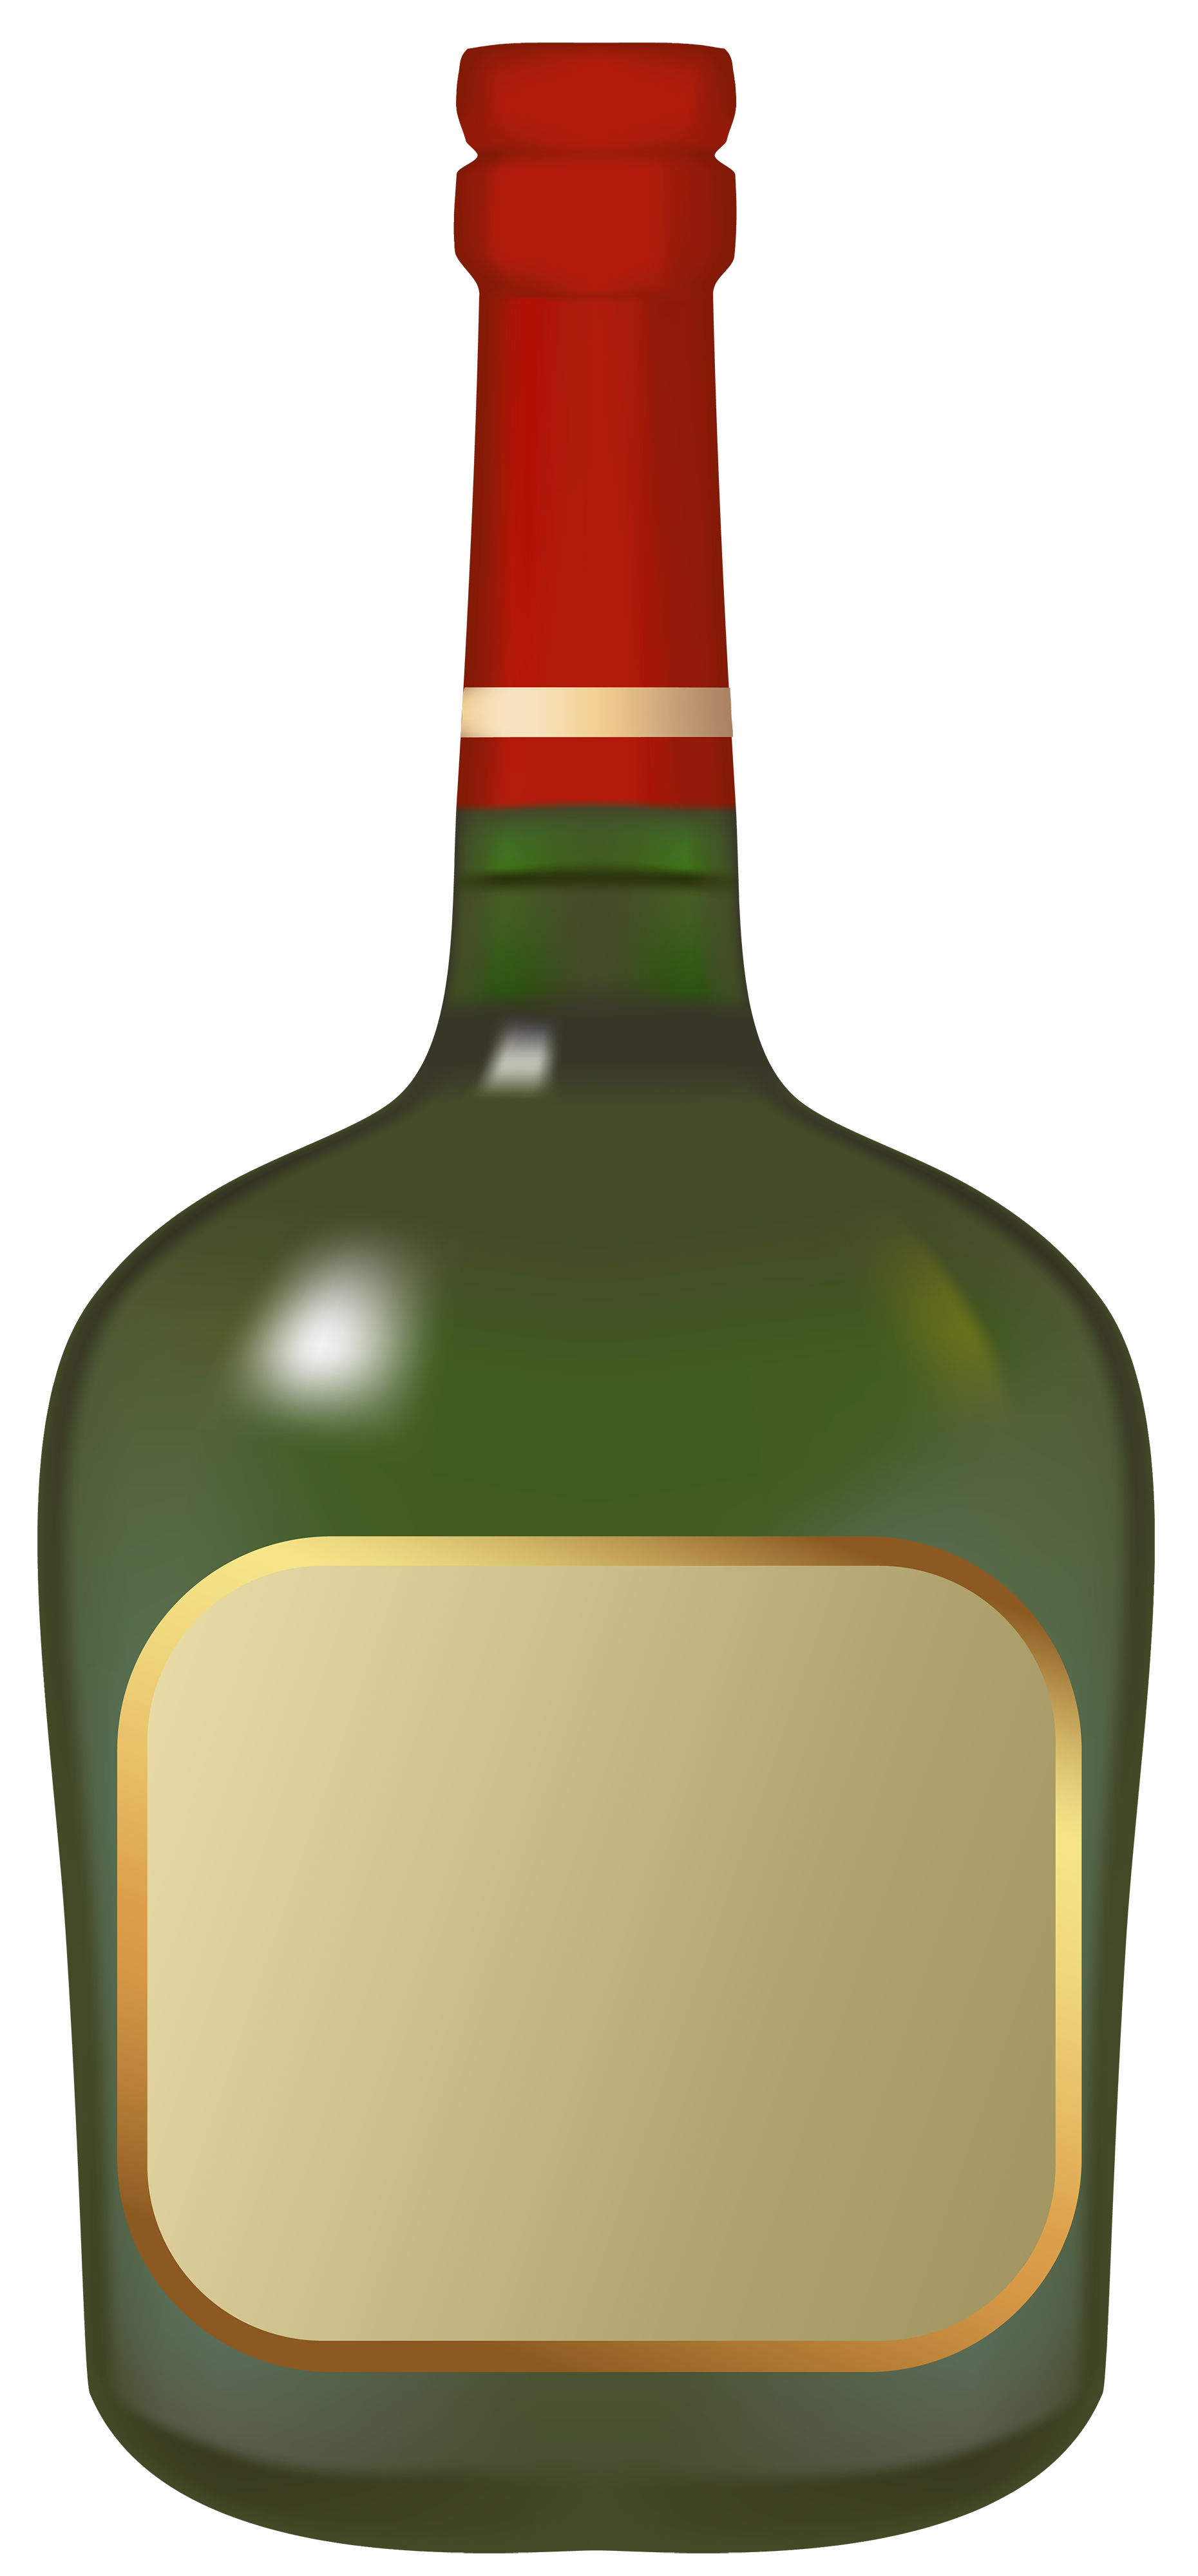 Bottle of booze clipart